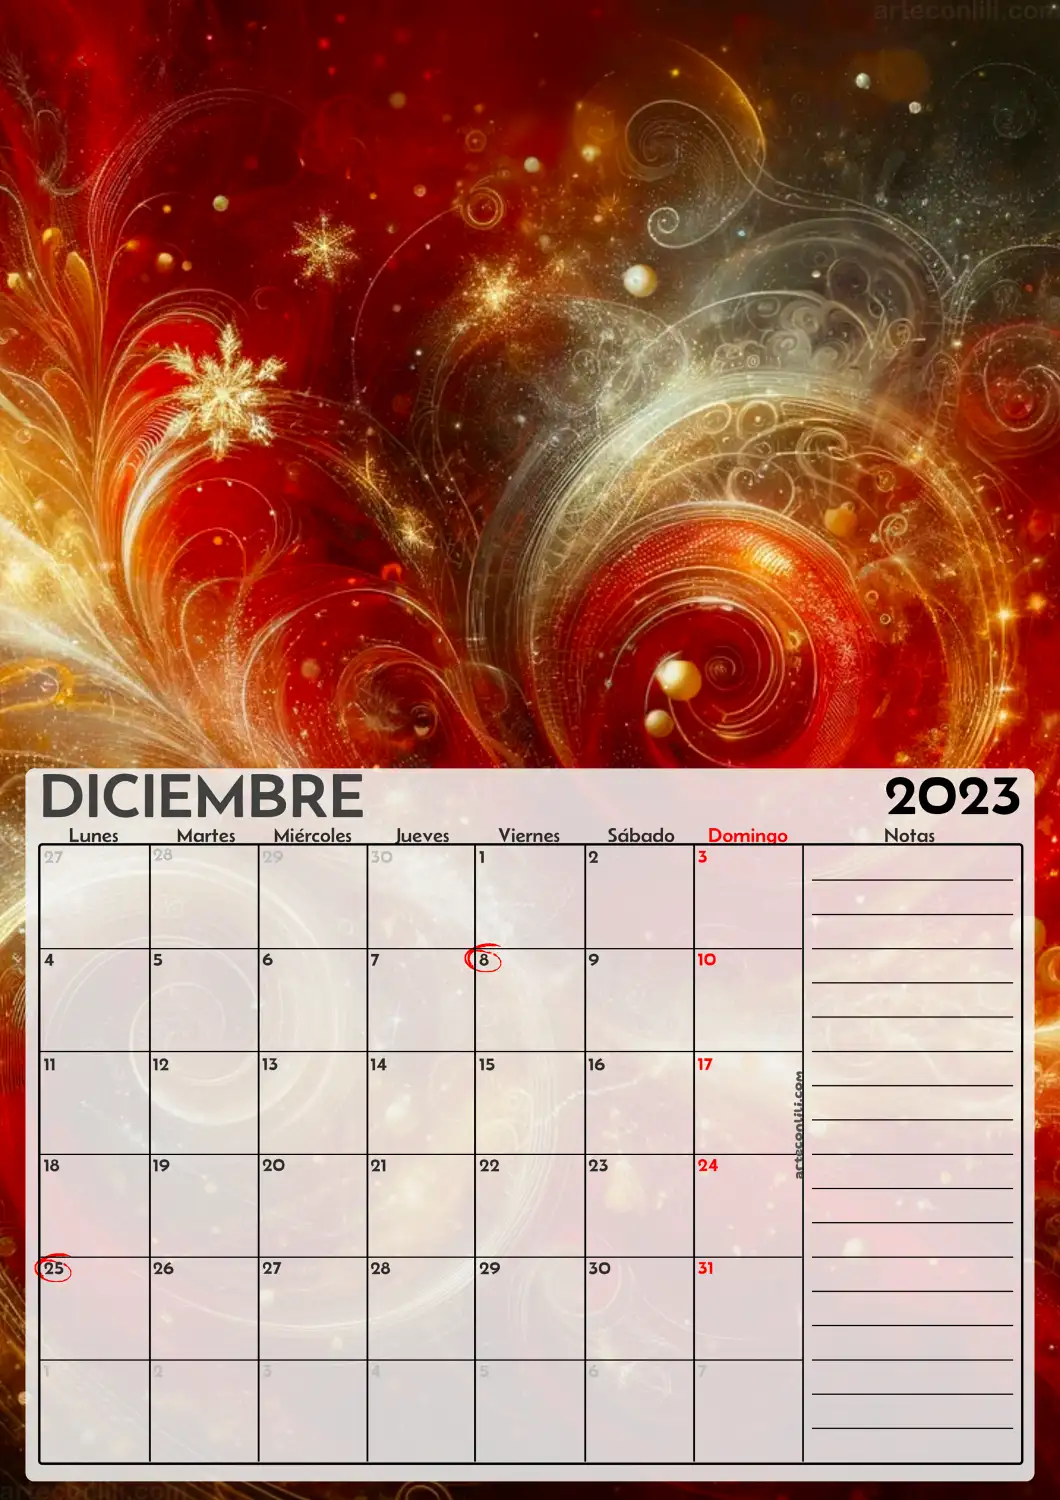 calendario diciembre 2023 motivos navidad arteconlili.com2